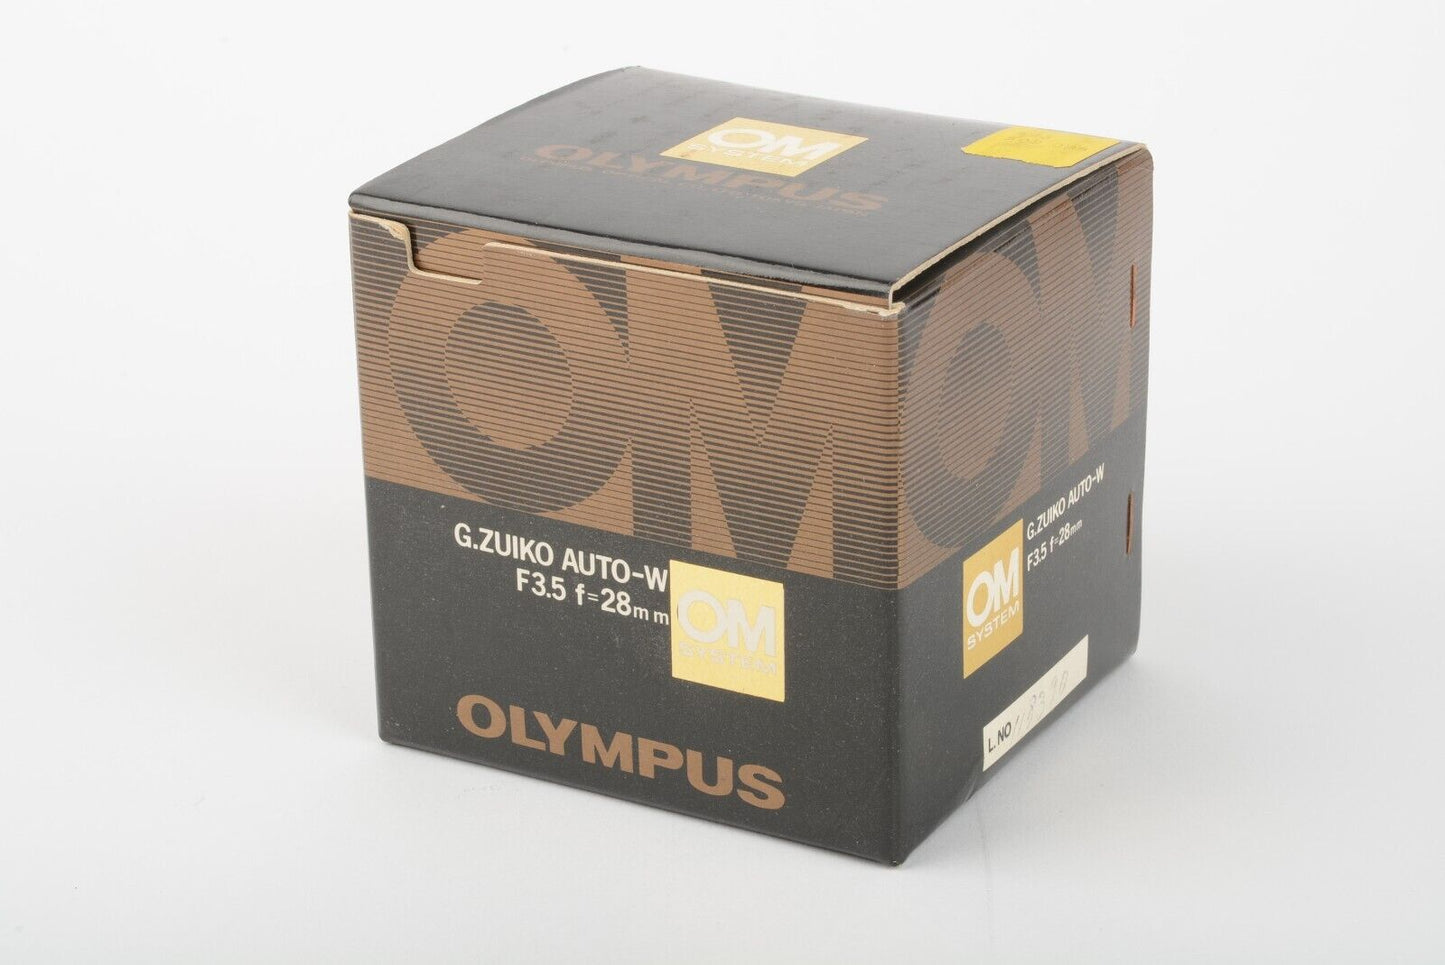 EXC++ OLYMPUS OM-SYSTEM G.ZUIKO AUTO-W 28mm f3.5 WIDE LENS, CASE, HOOD, BOX NICE